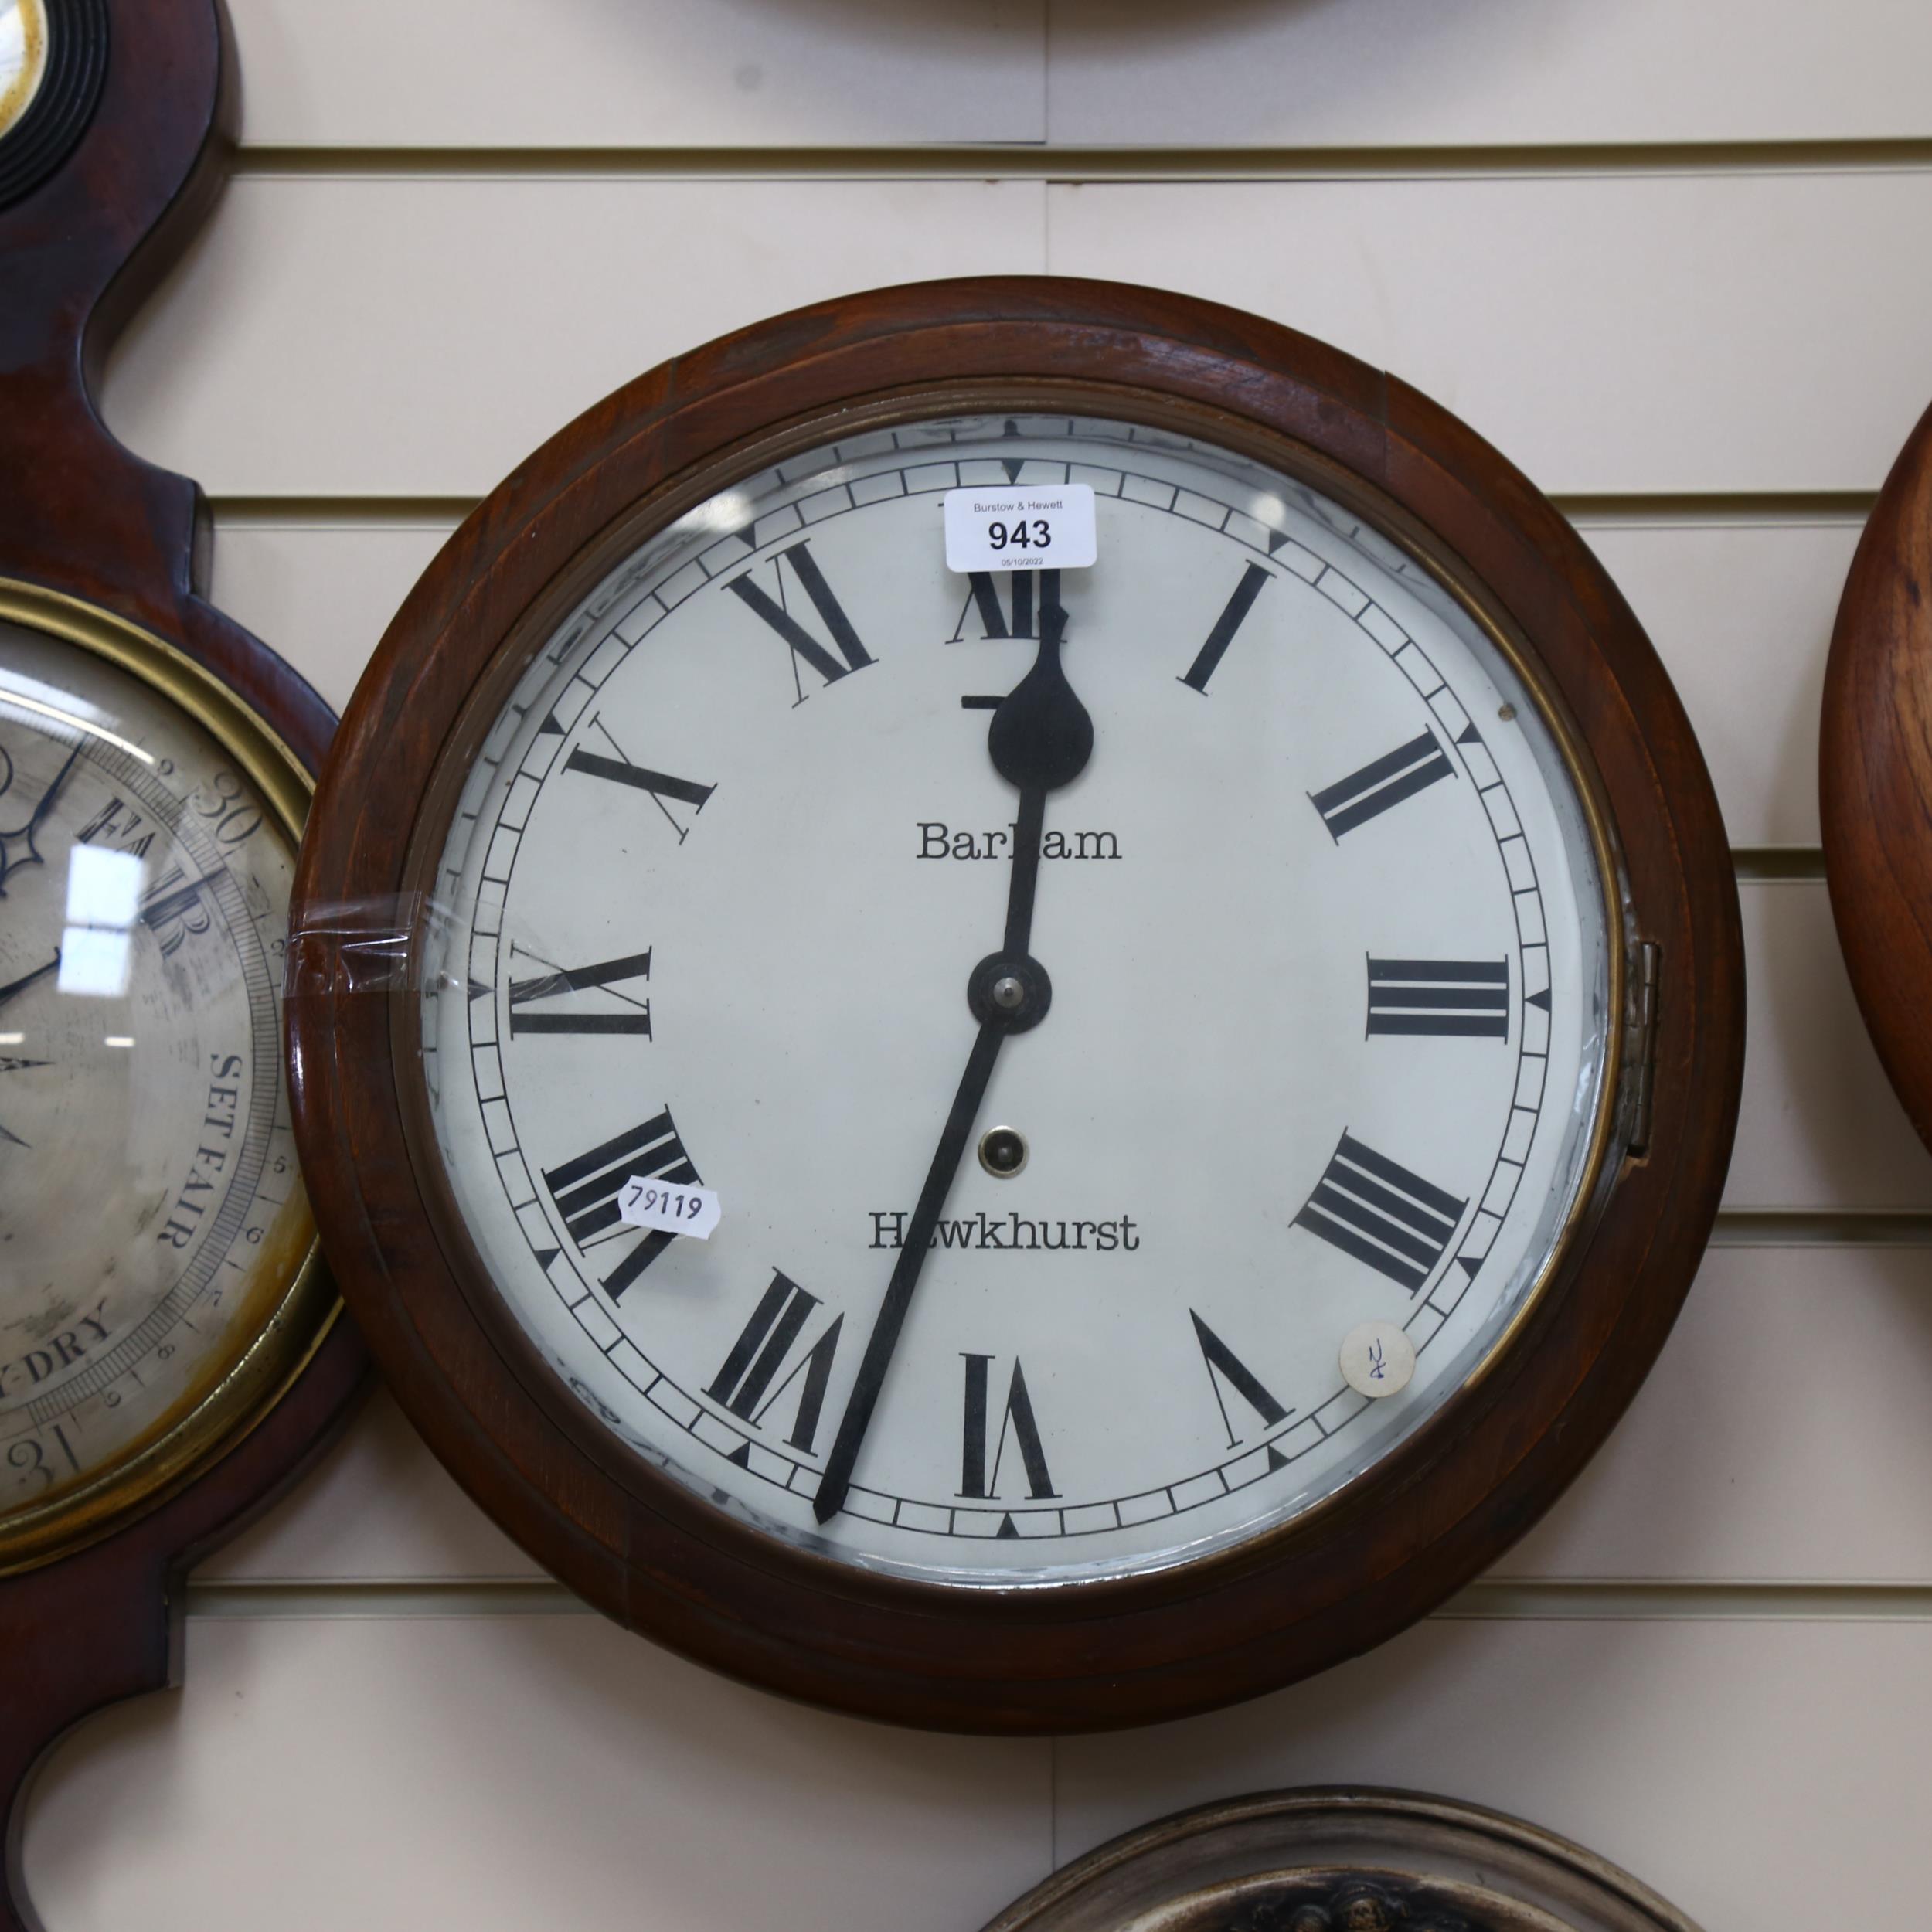 BARLAM HAWKHURST - an early 20th century 8-day dial wall clock, no key or pendulum, case width 37cm